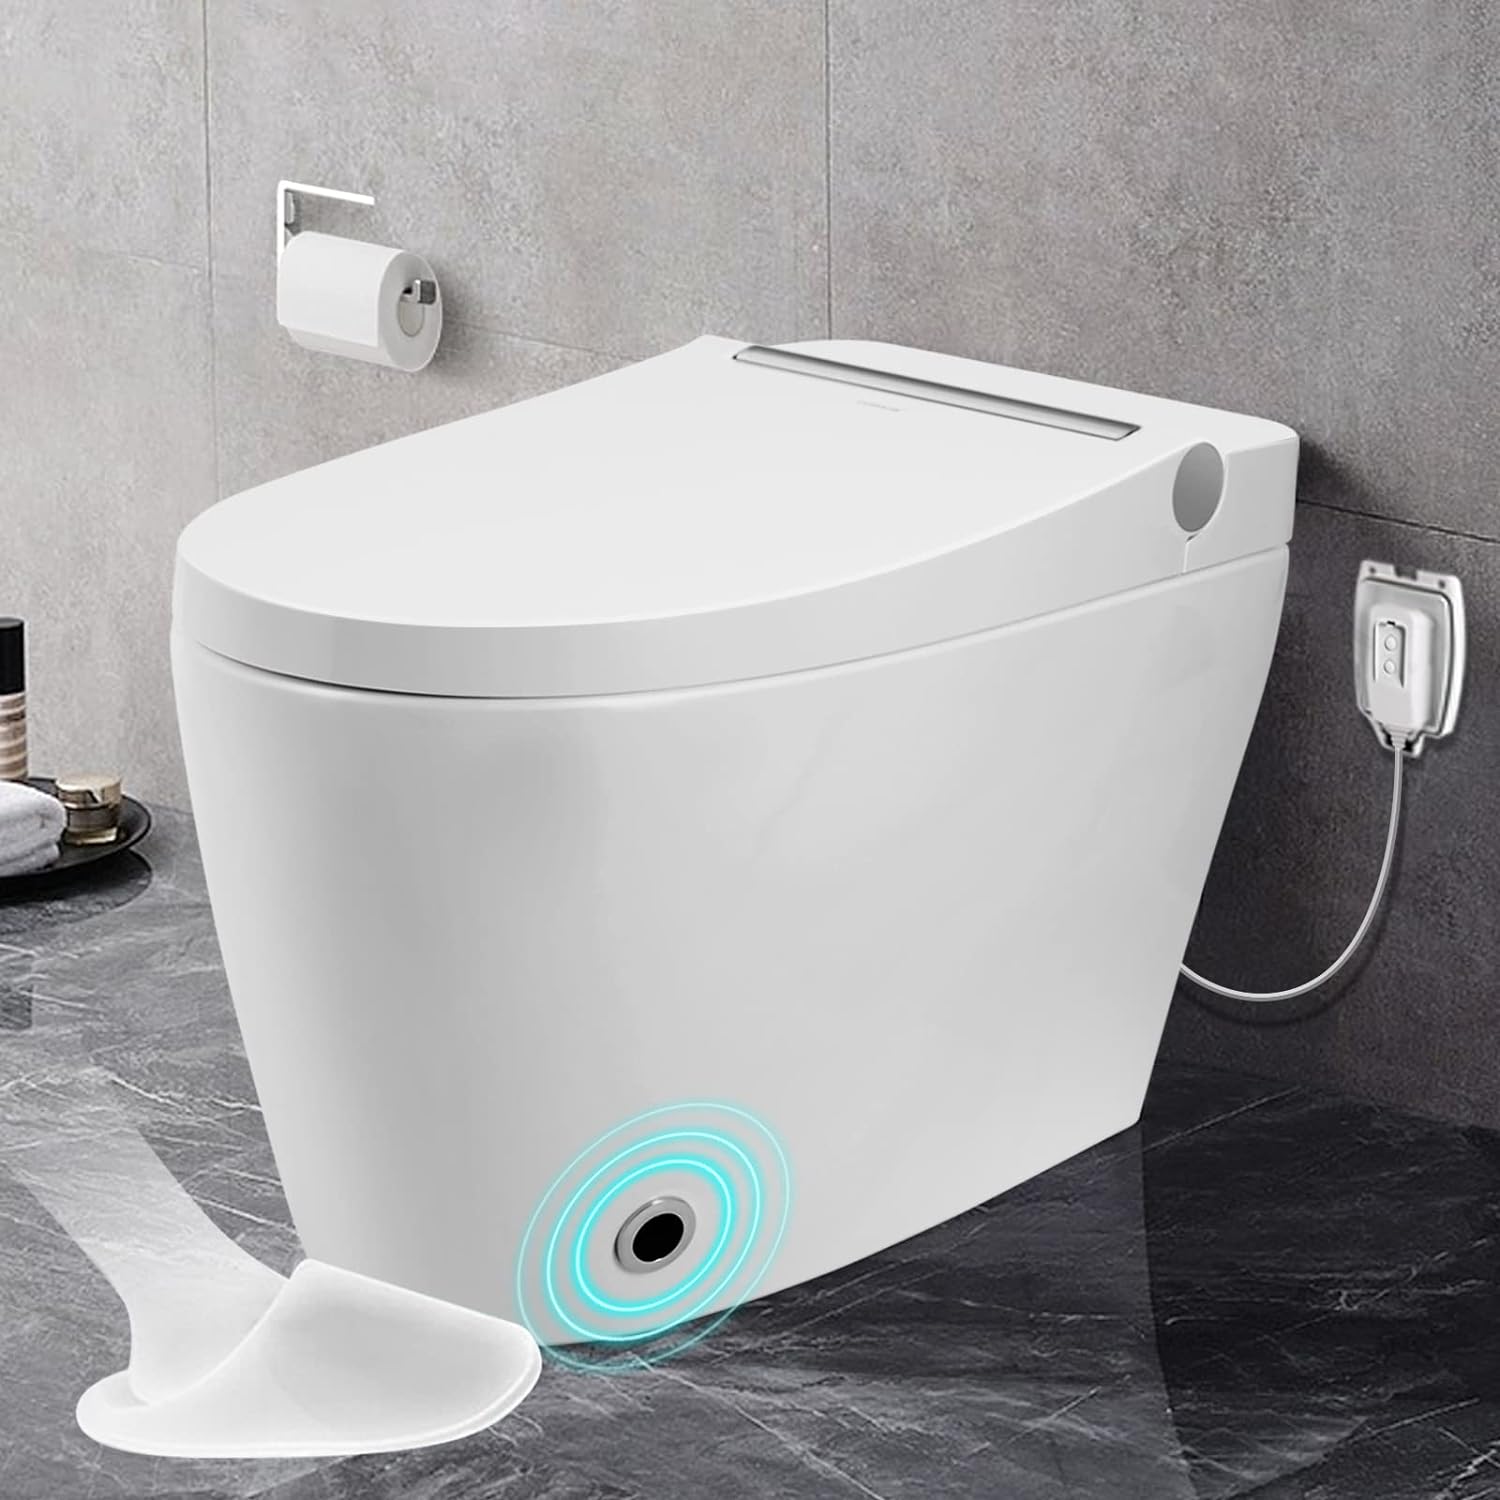 Cosvalve Heated Seat Smart Toilet, One Piece Toilet, Automatic Flush Tankless Toilet without Bidet, Foot sensor Flush, Blue Night Light, Knob Control, Power Outage Flushing